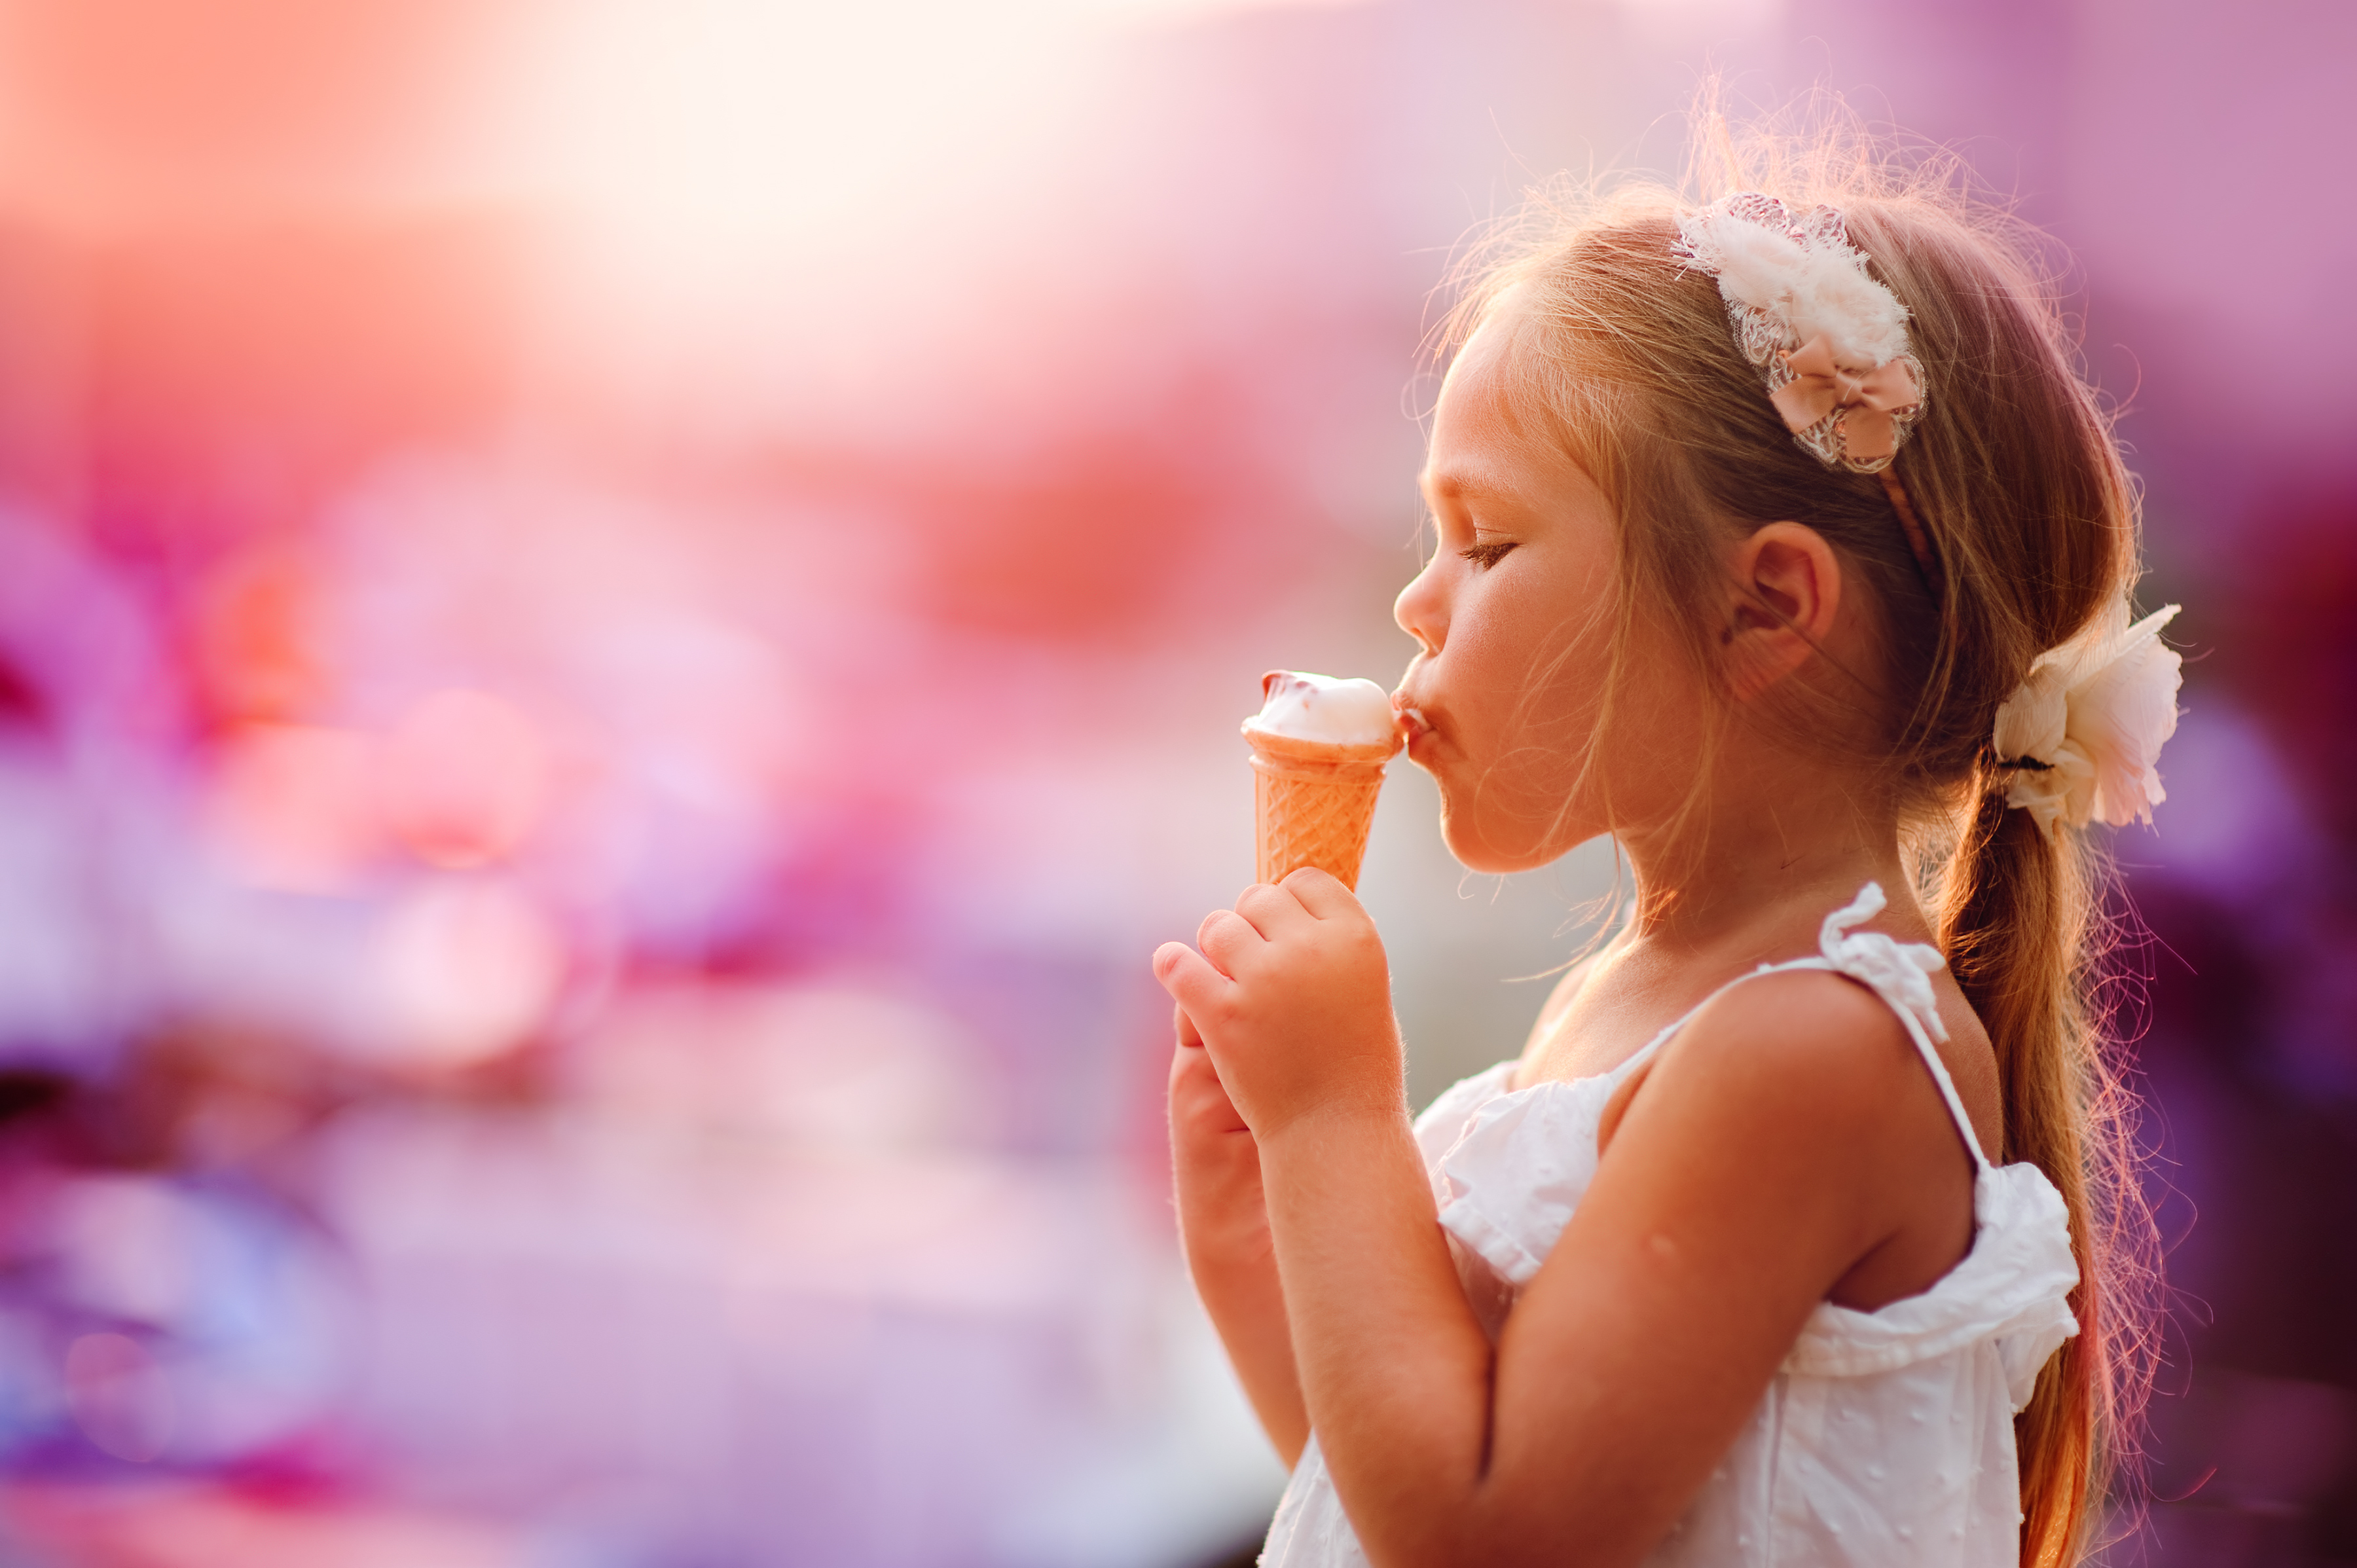 Сосание девочки. Девочка ест мороженое. Дети едят мороженое. Ребенок с мороженым. Девочка с мороженым.